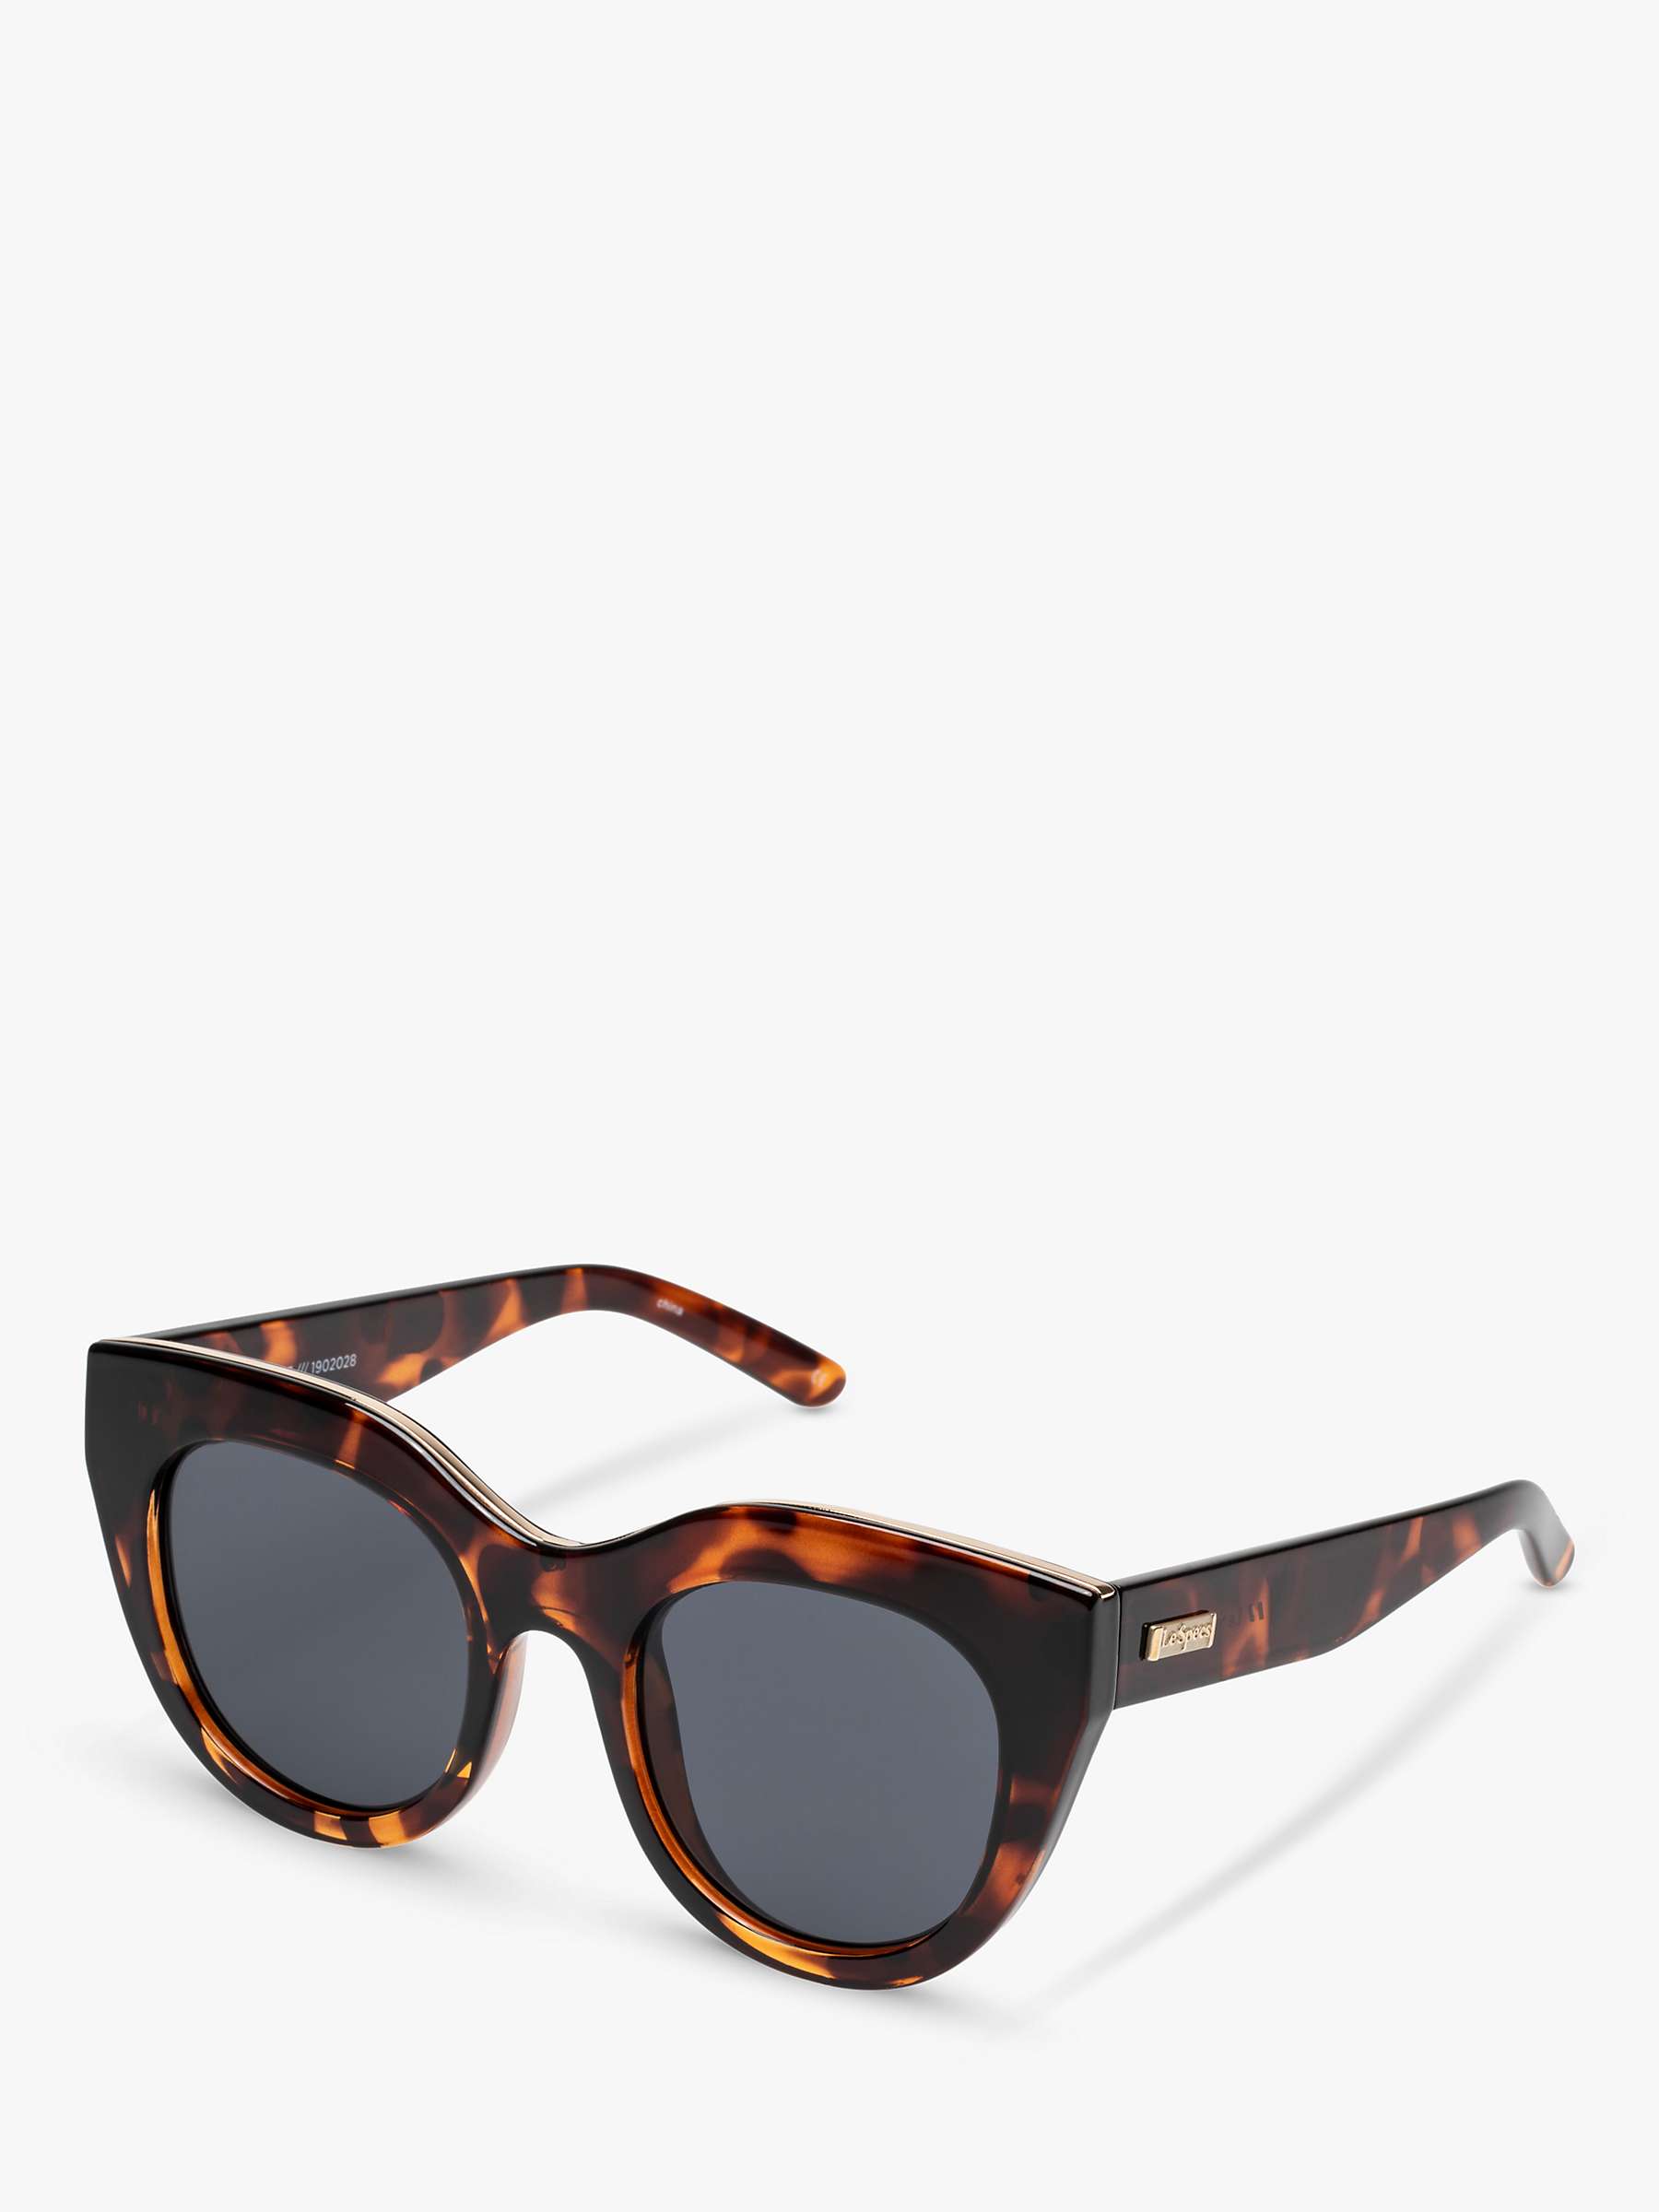 Buy Le Specs Women's Air Heart Cat's Eye Sunglasses Online at johnlewis.com